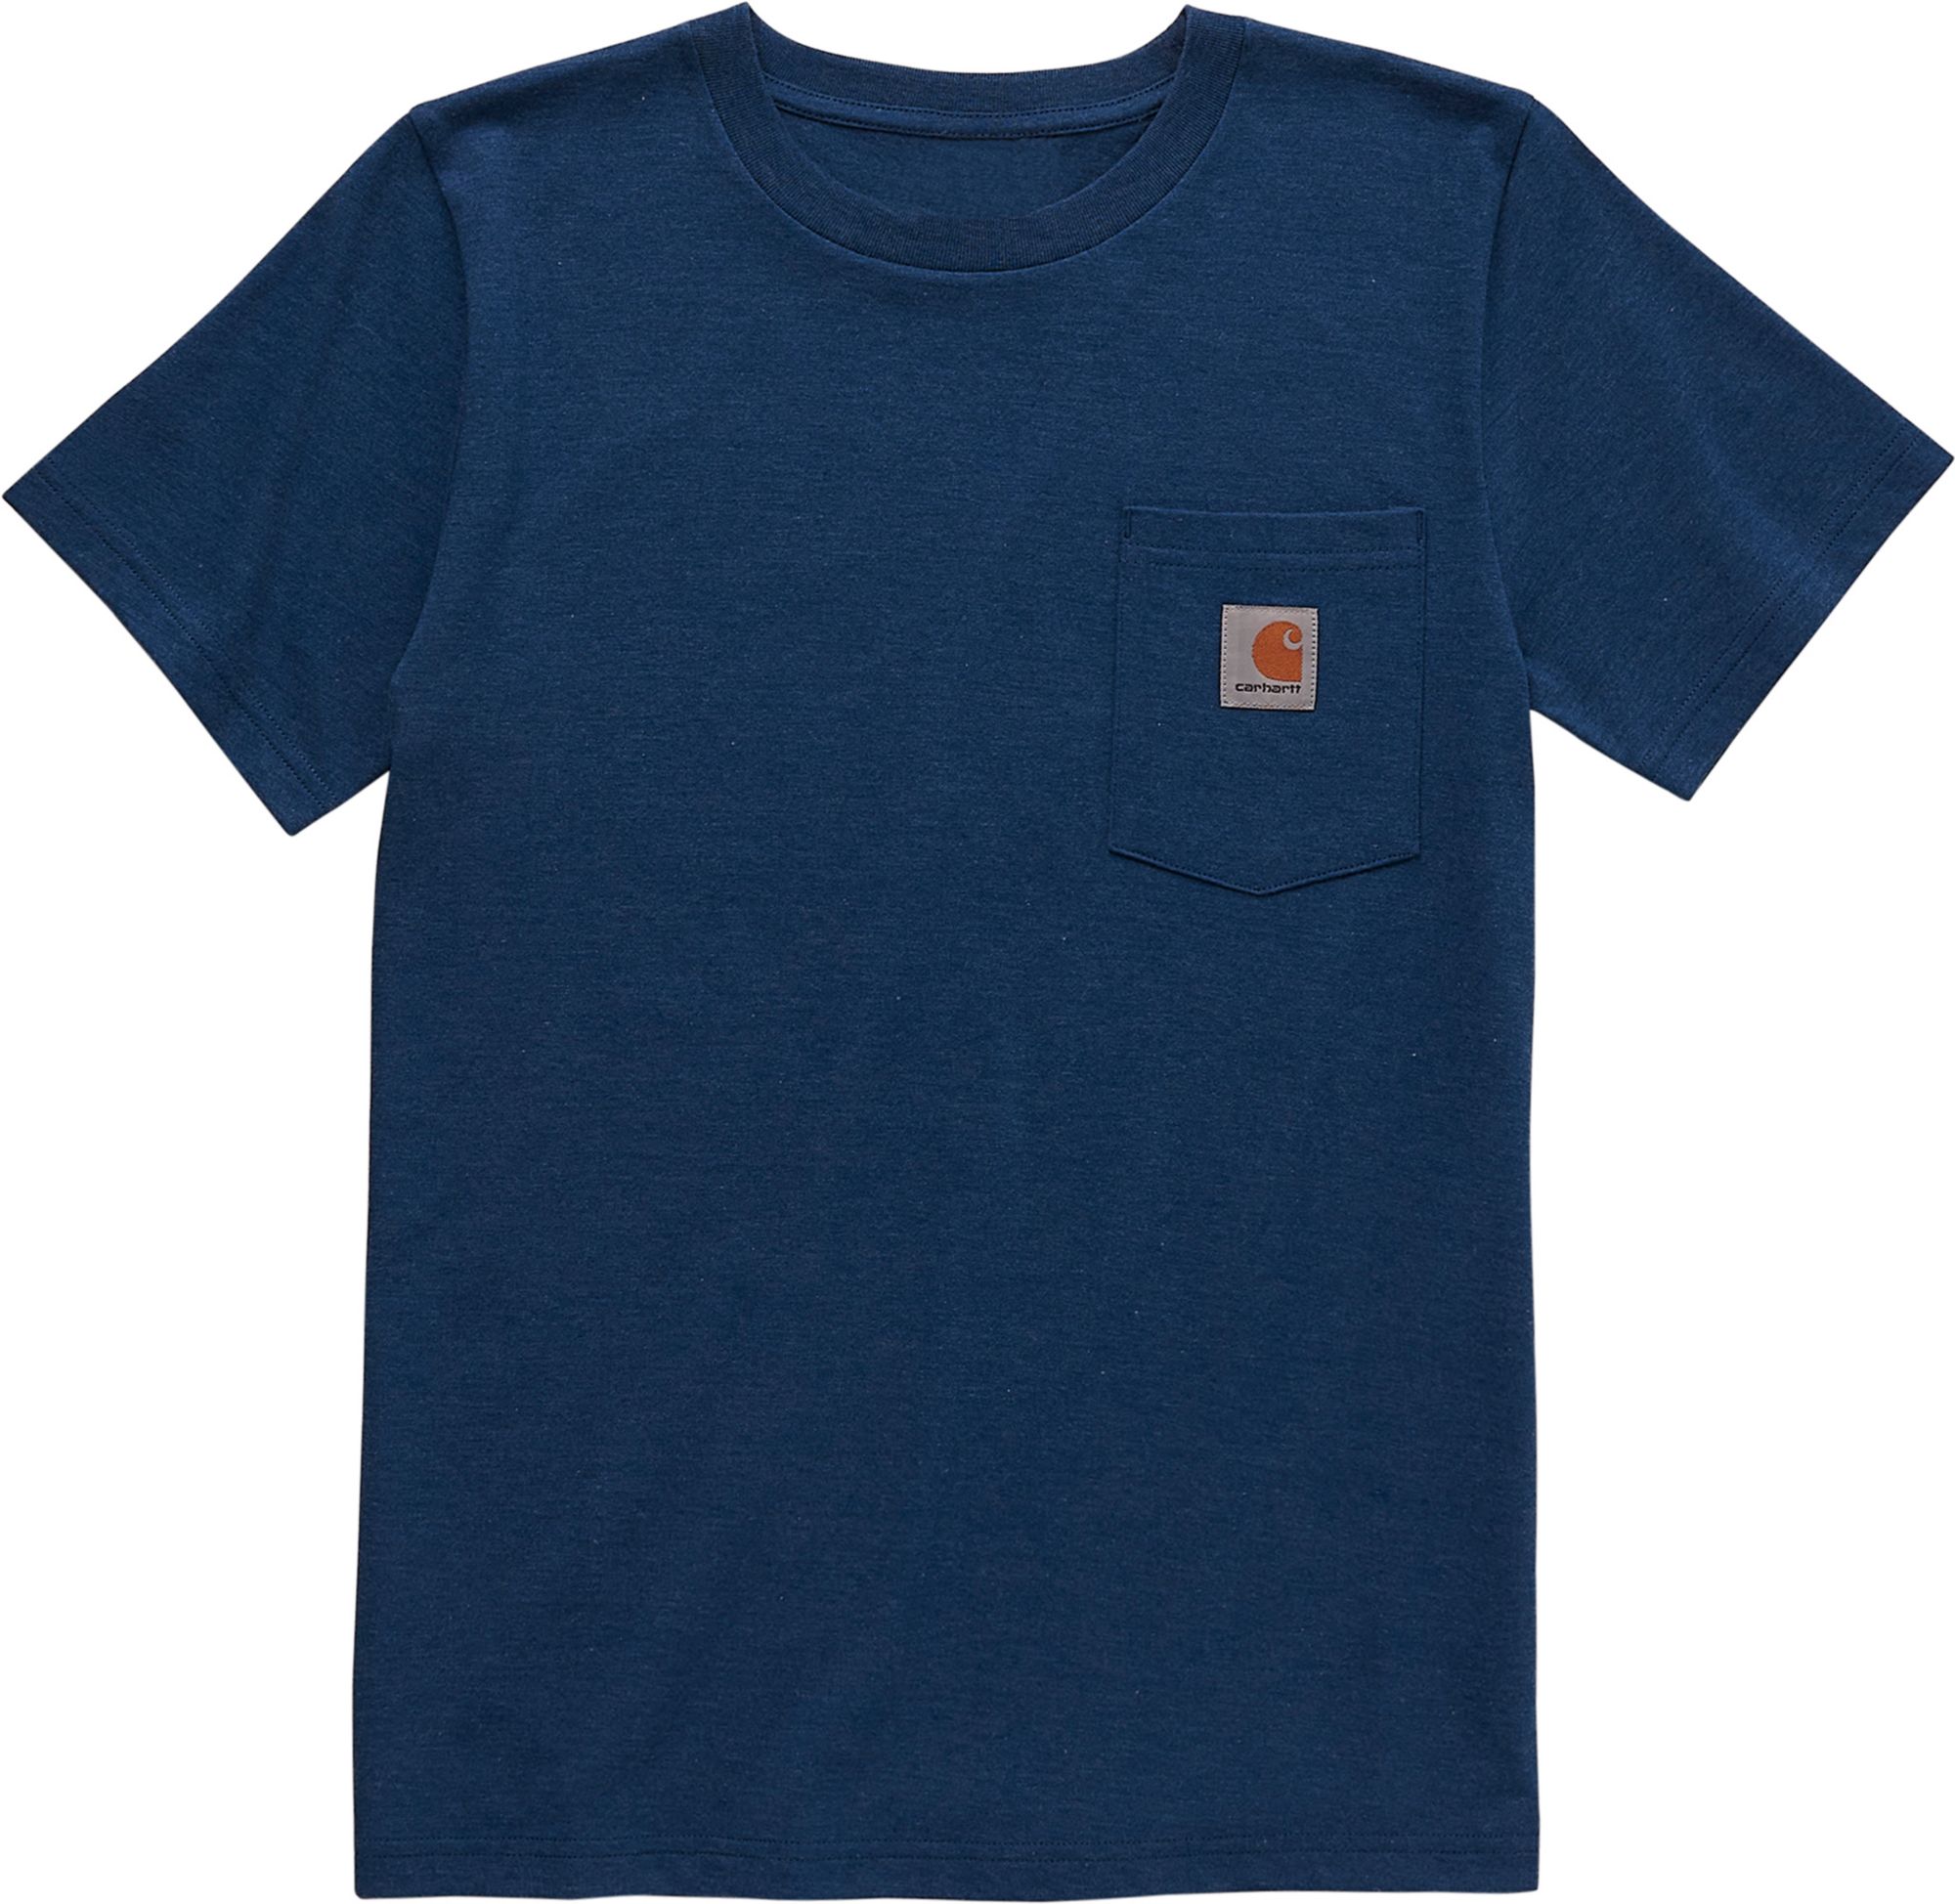 Carhartt Youth Pocket T-Shirt